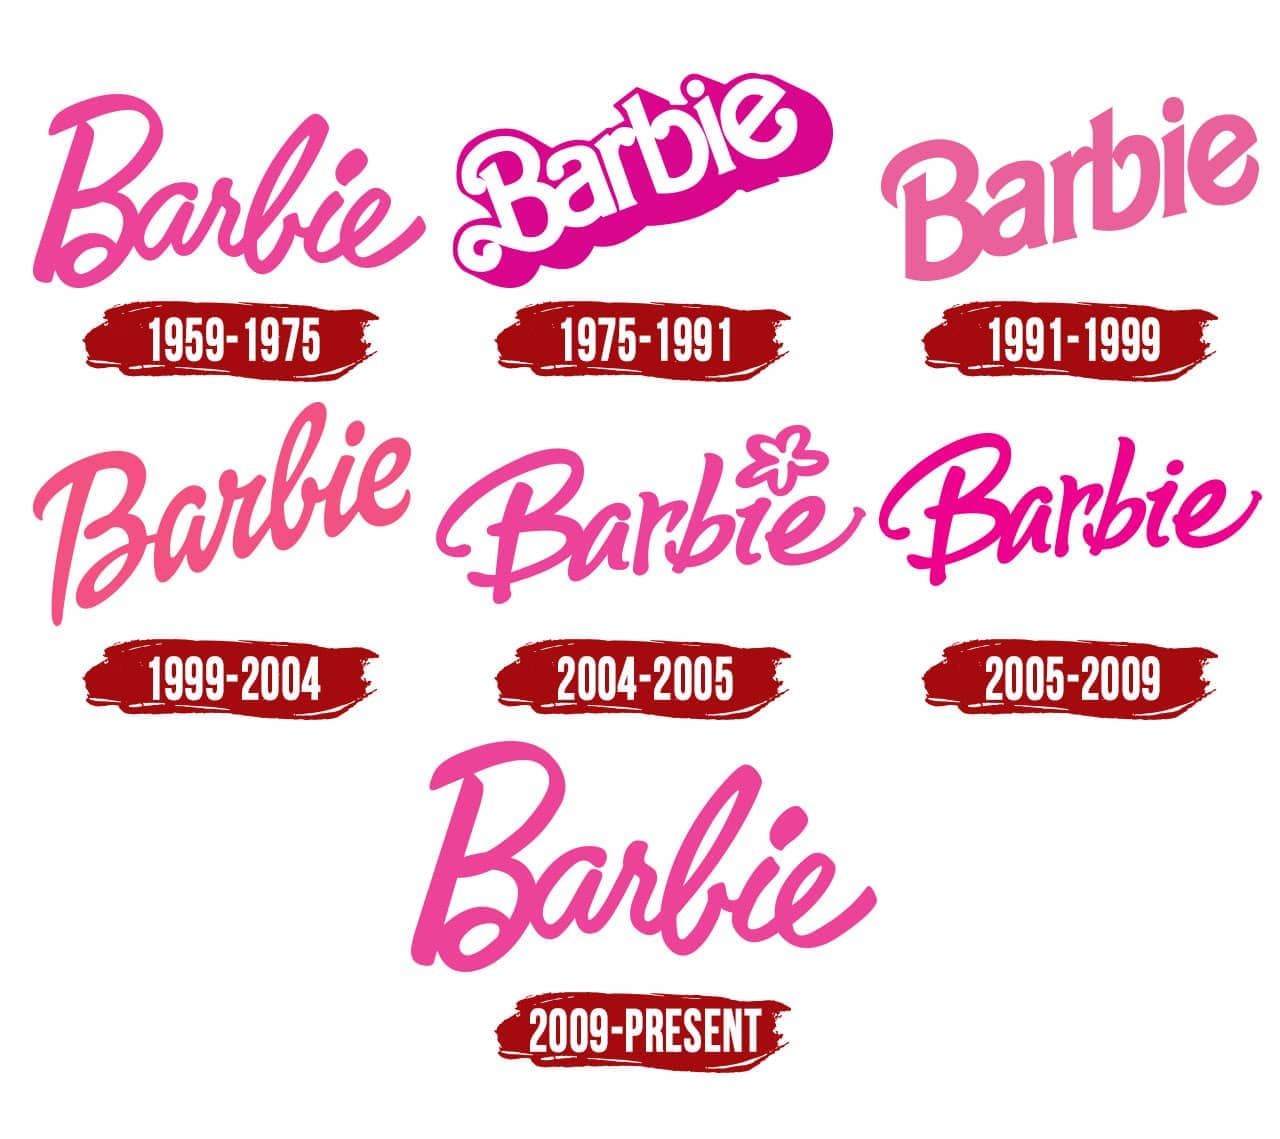 barbie-logo-symbol-history-png-3840-2160